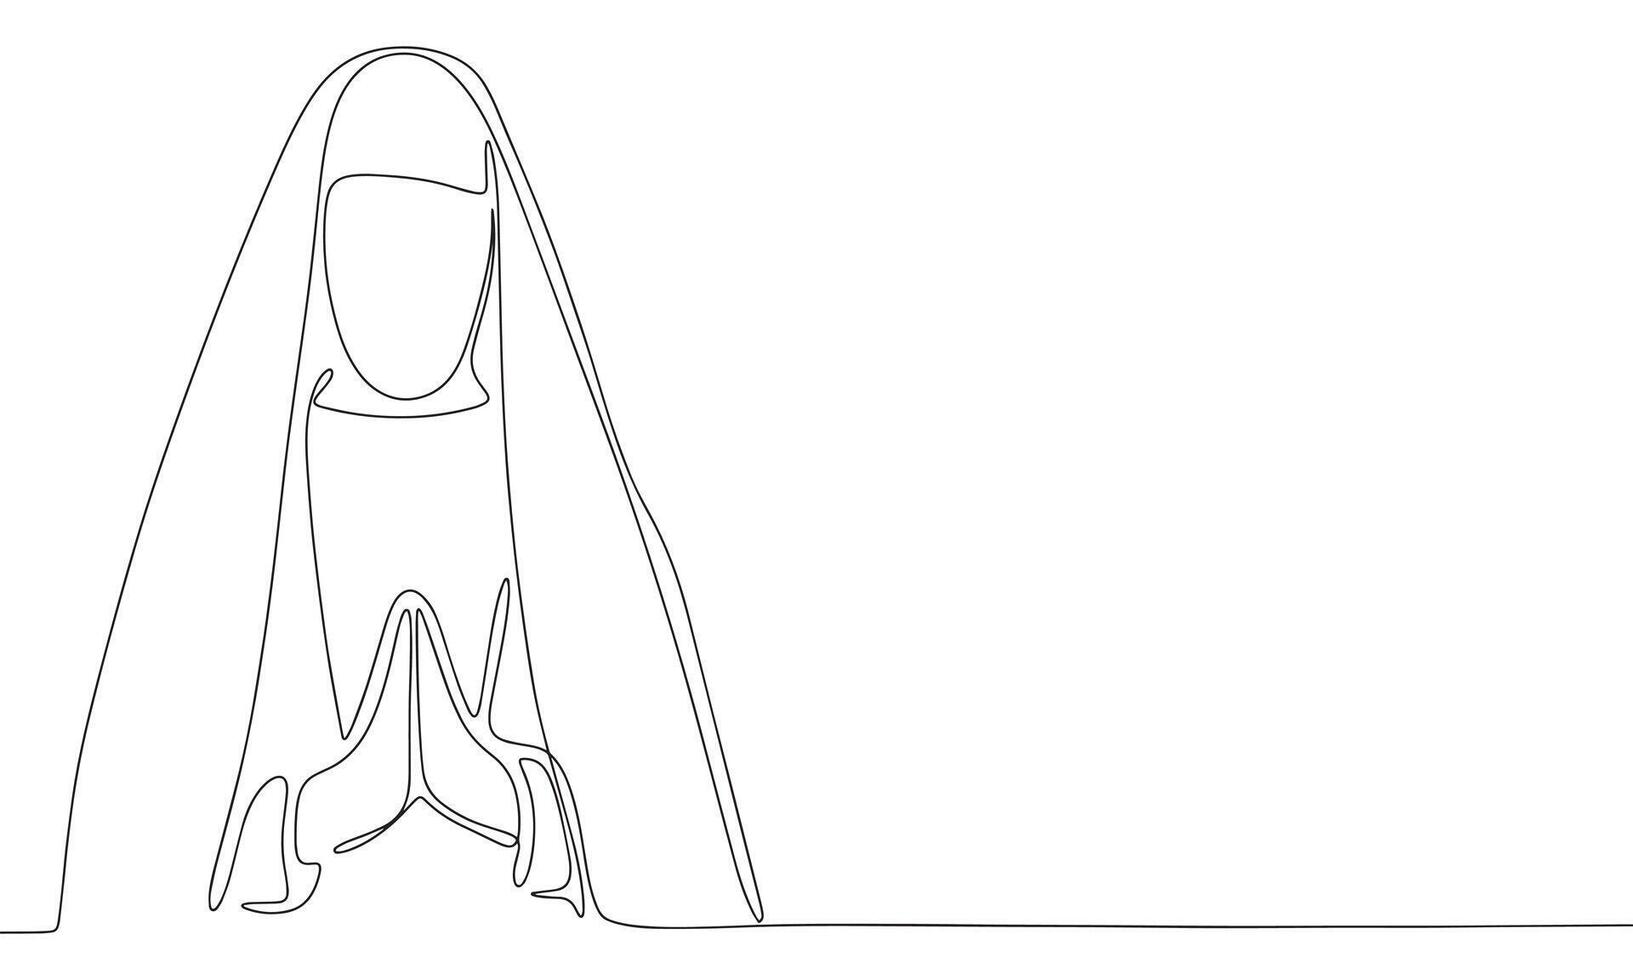 Nun one line continuous. Line art Christian nun, religion banner concept. Hand drawn vector art.